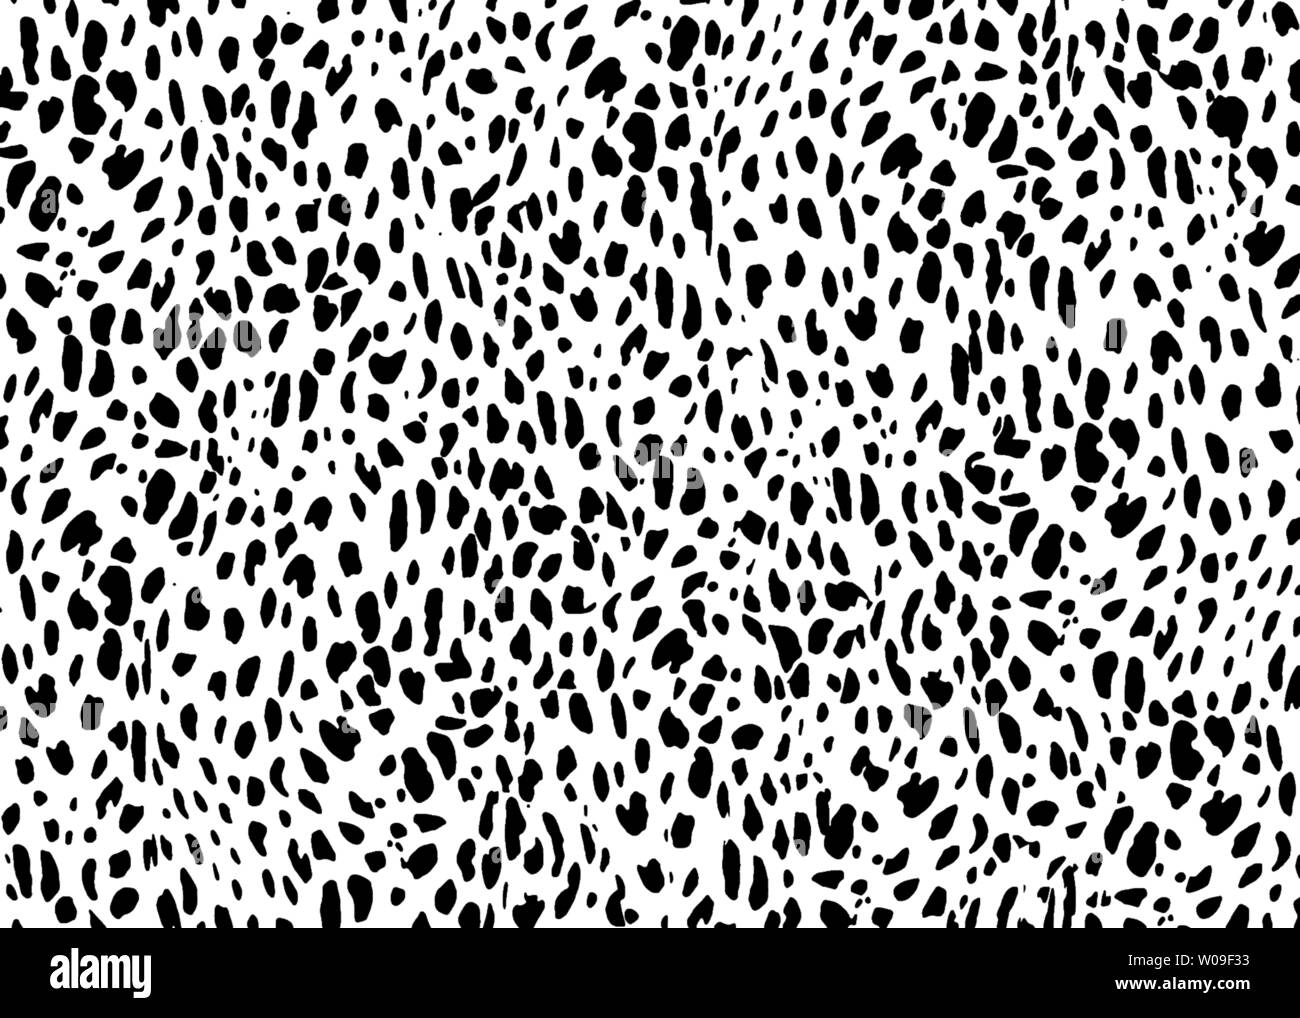 Leopard pattern design, vector illustration background. For print, textile, web, home decor, fashion, surface, graphic design Stock Vector